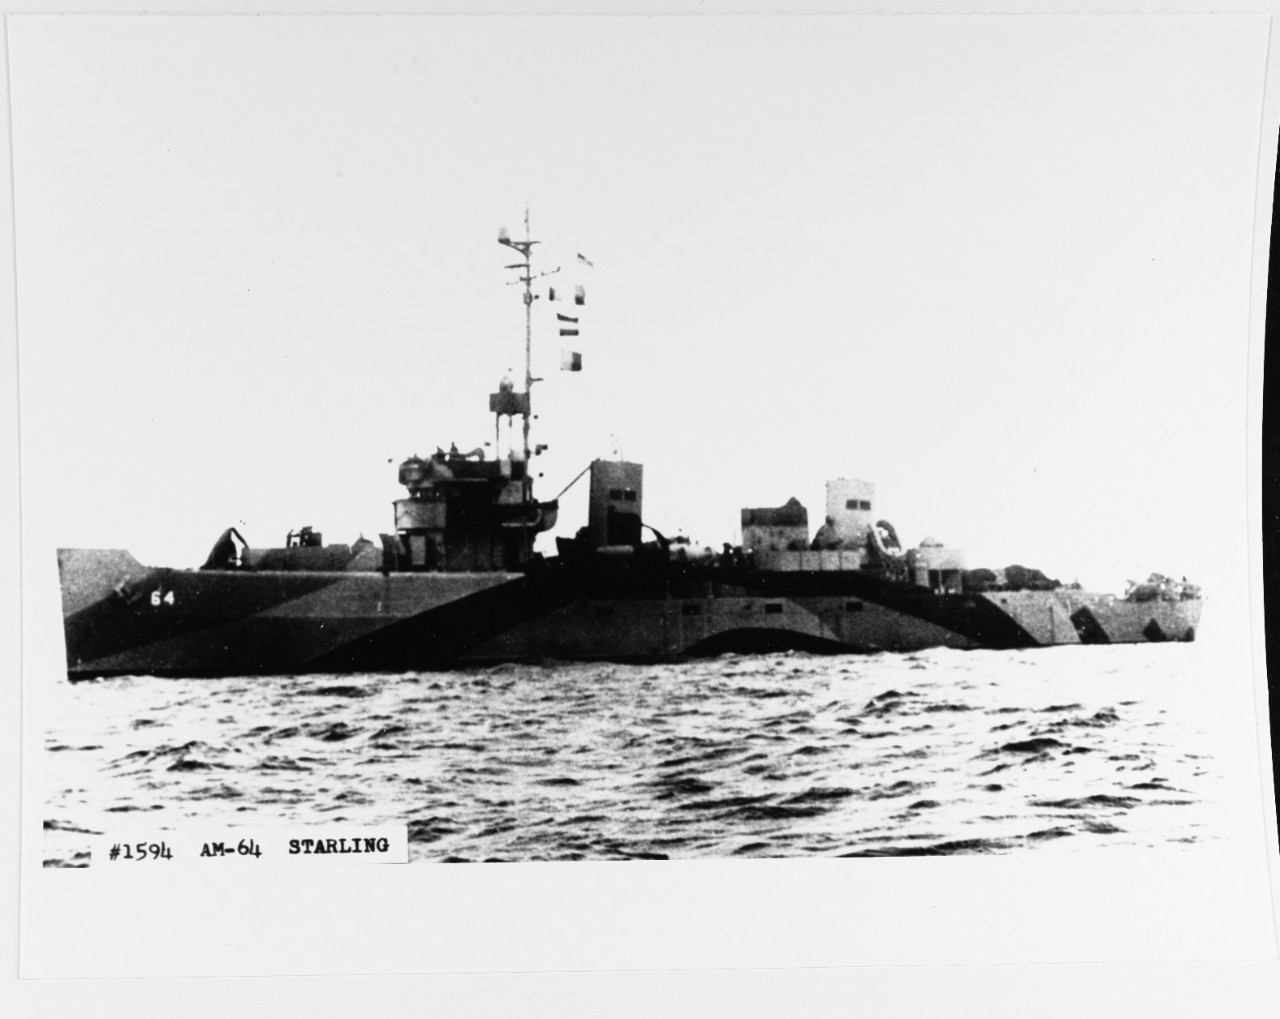 USS STARLING (AM-64)